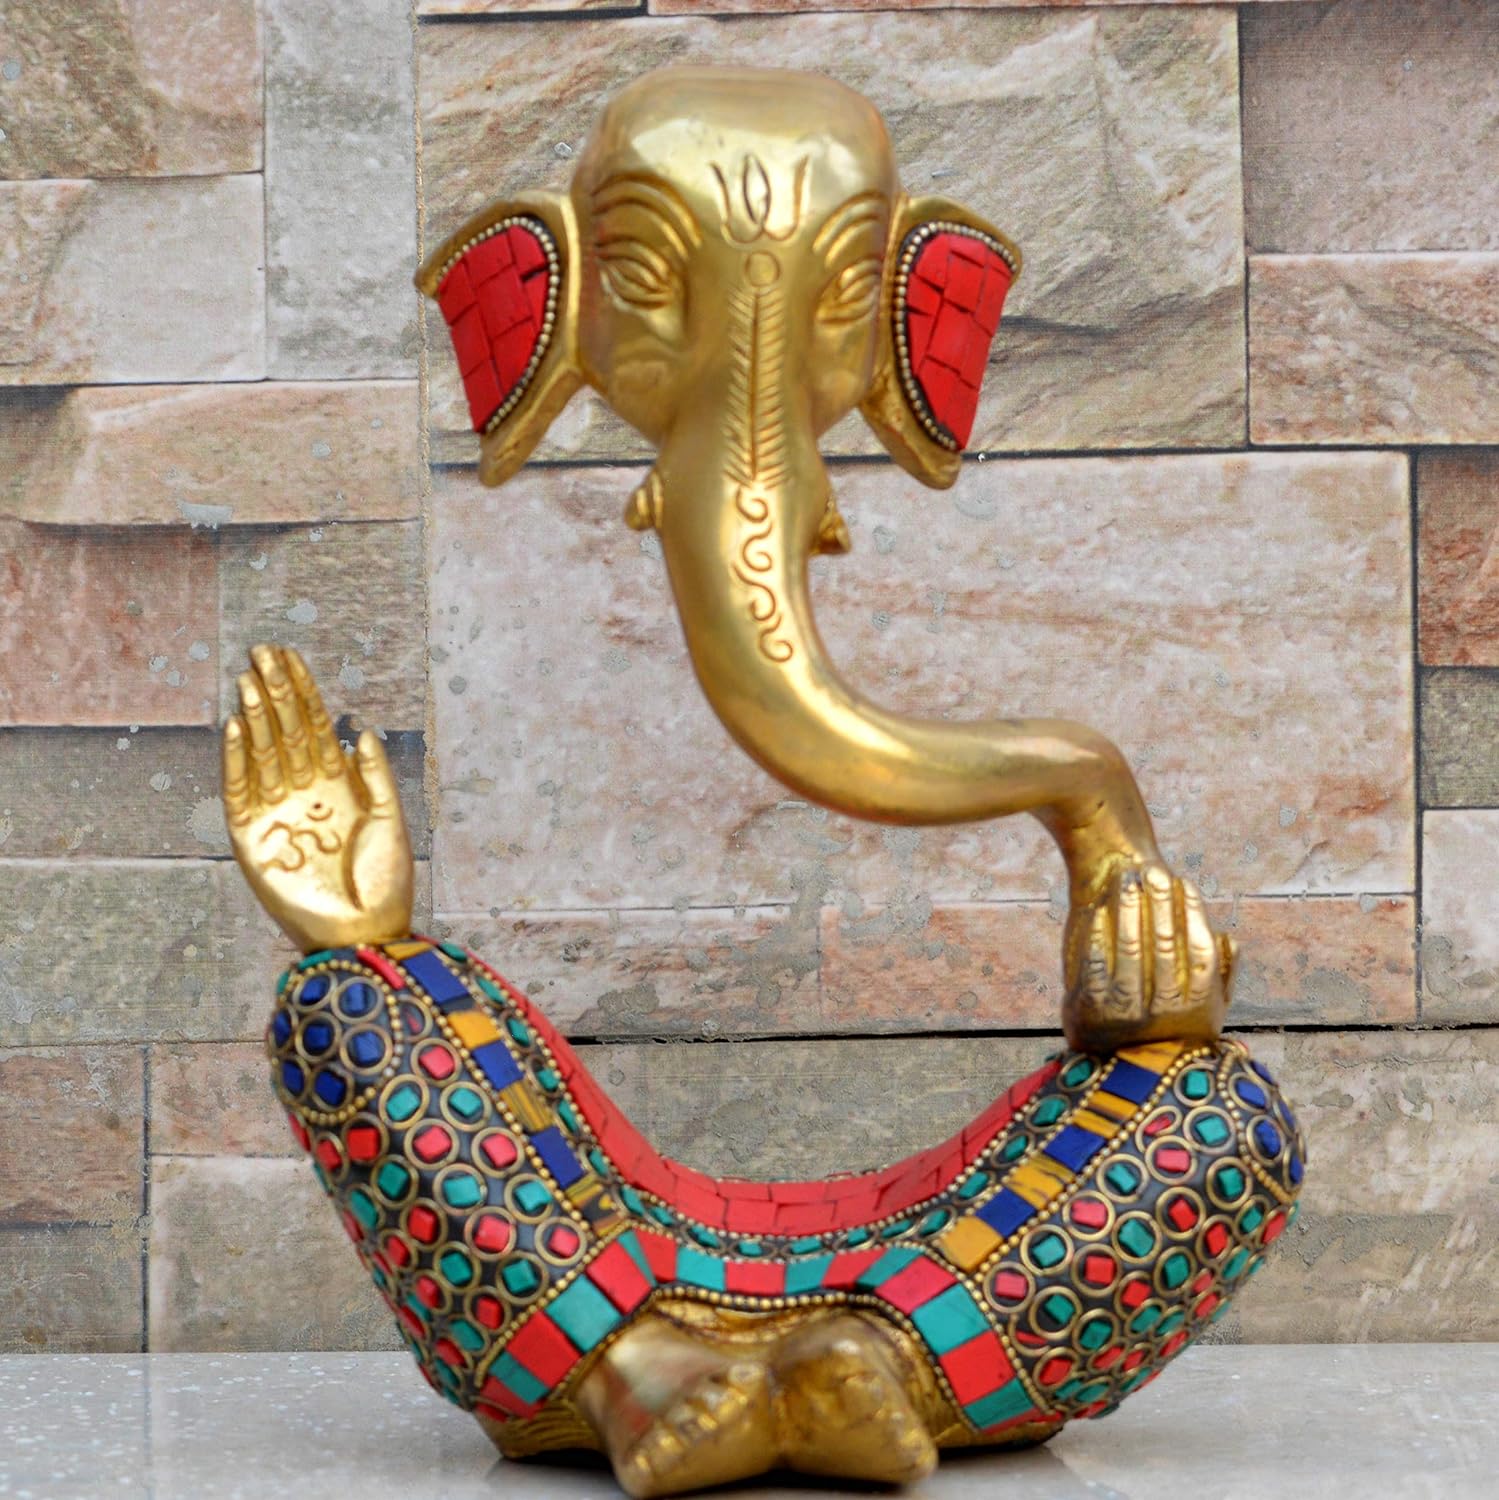 Ganesh with Decorative Work - Brass Modern Decorative Style God Ganpati Idol - Unique Gift and Home Decor showpiece